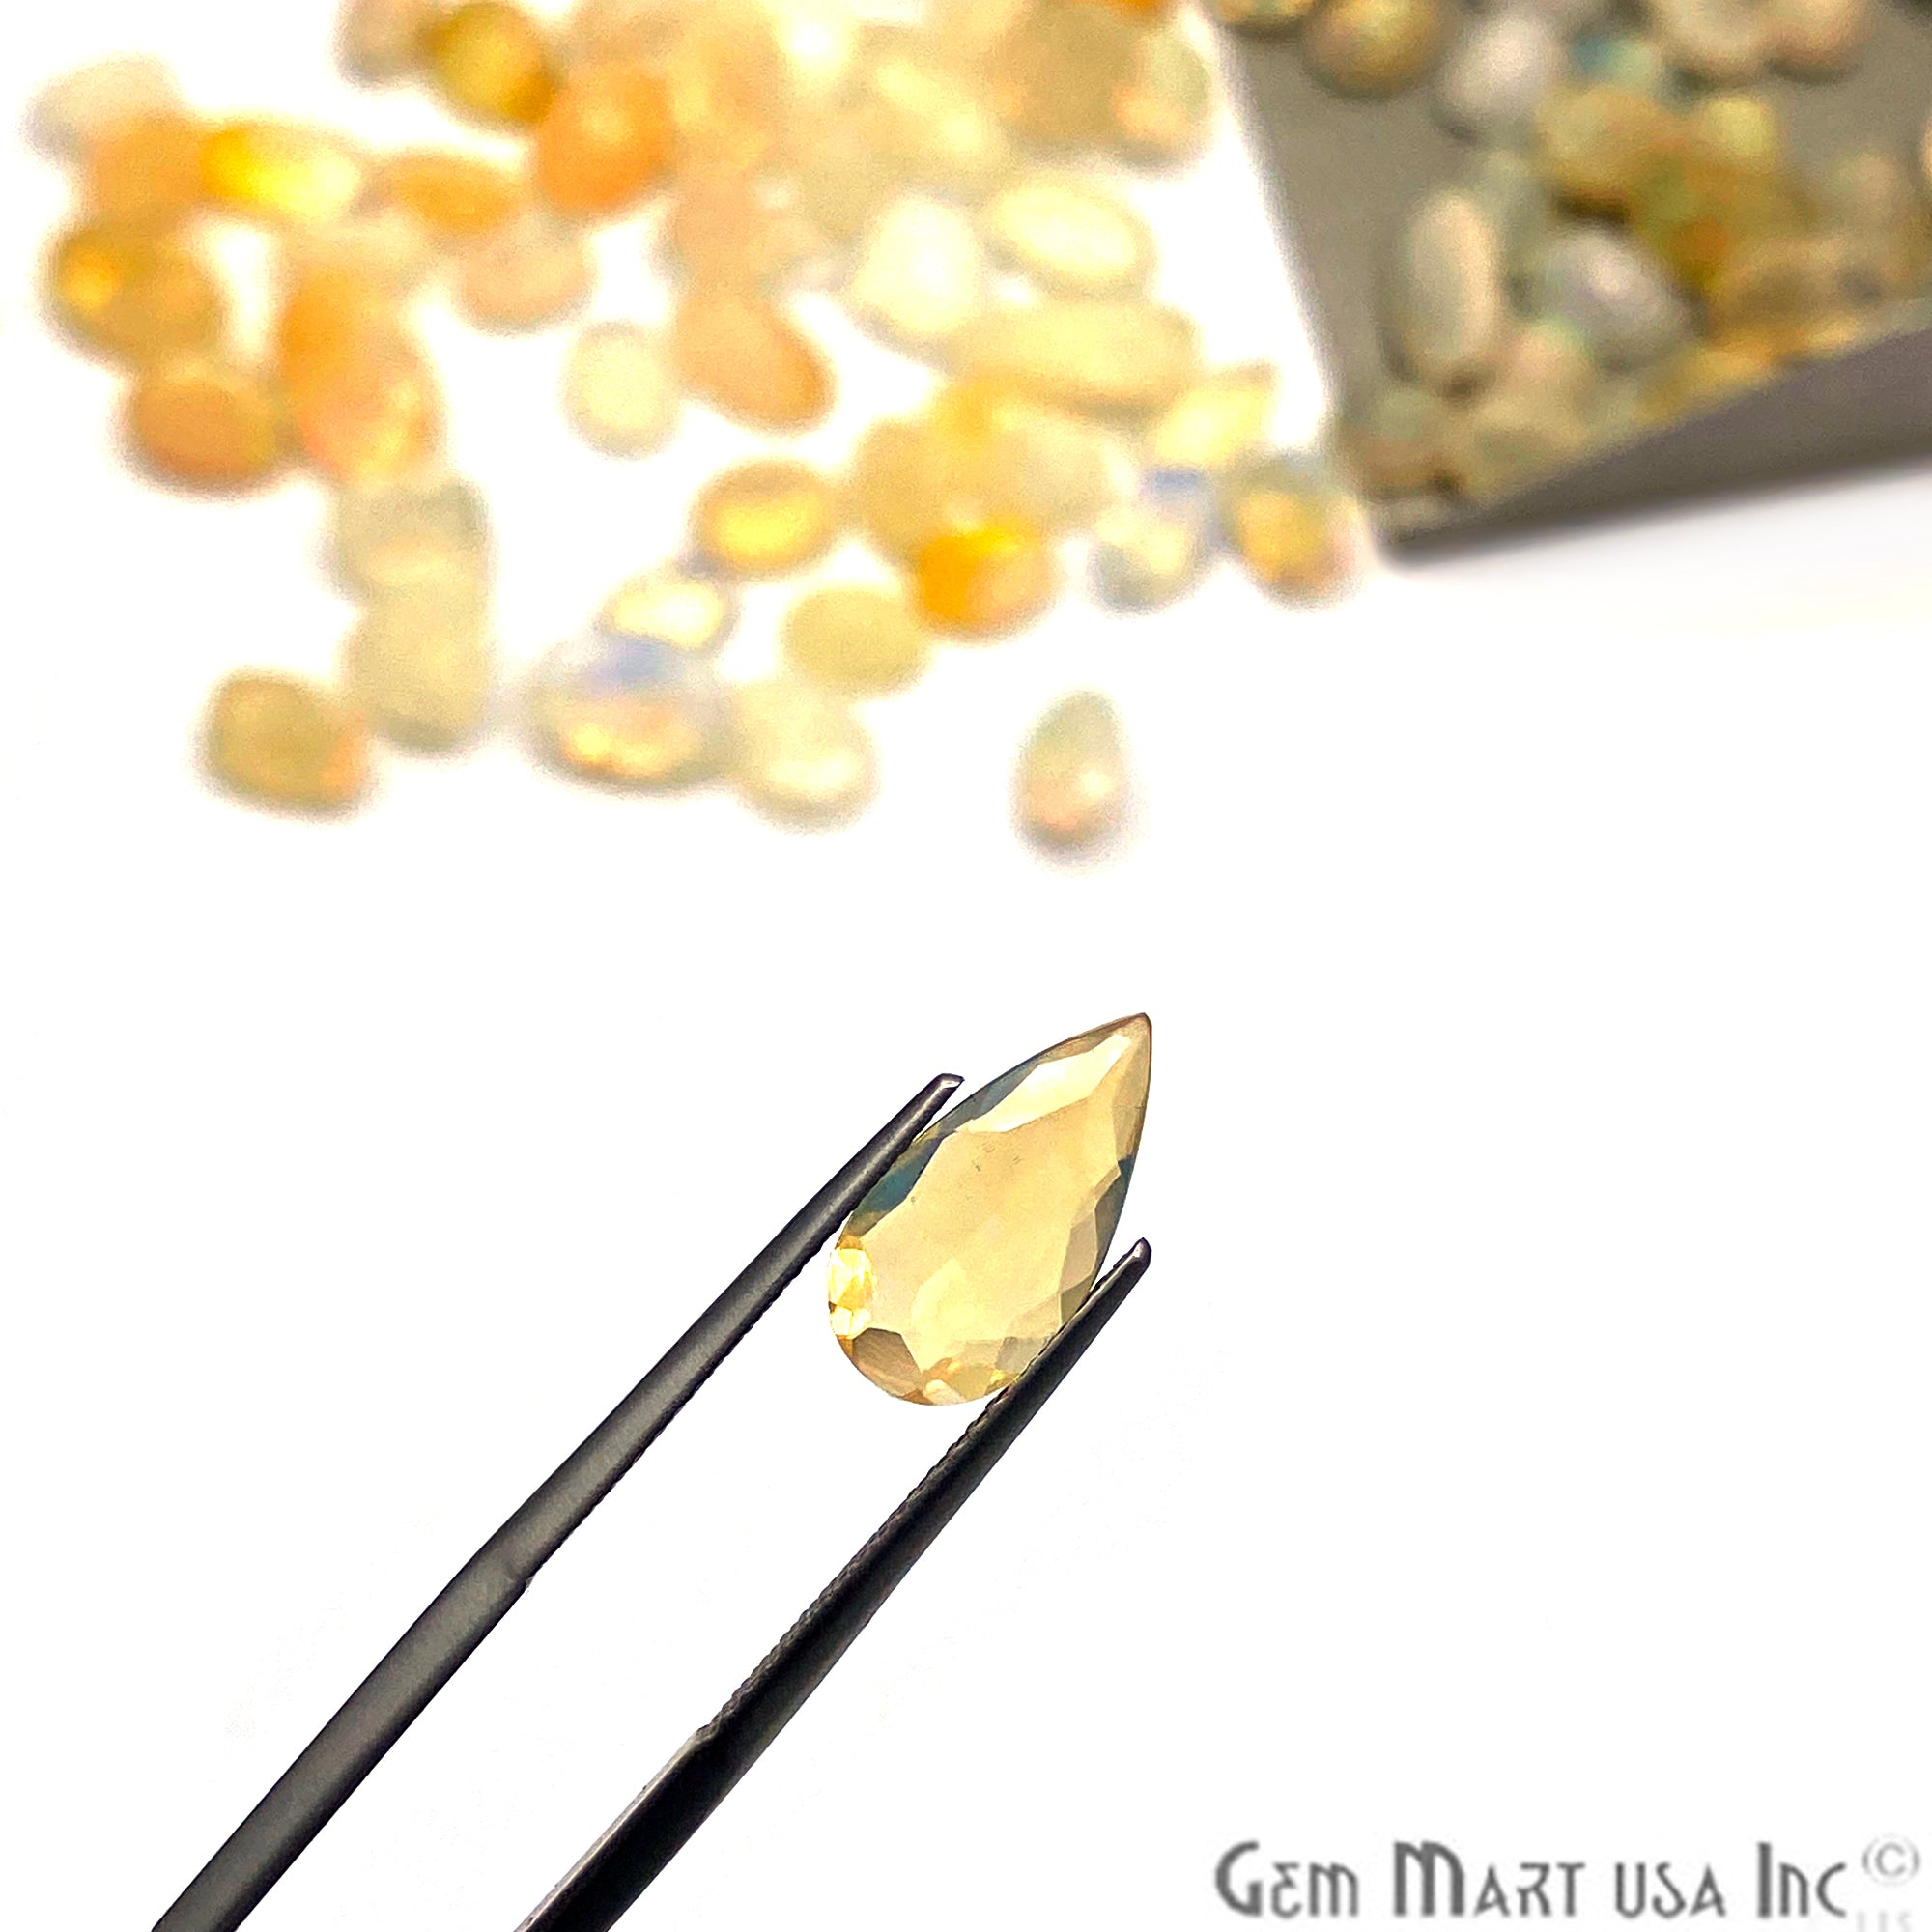 10 Carat Ethiopian Opal Gemstone Mix Shaped Lot Precious Loose Gems - GemMartUSA